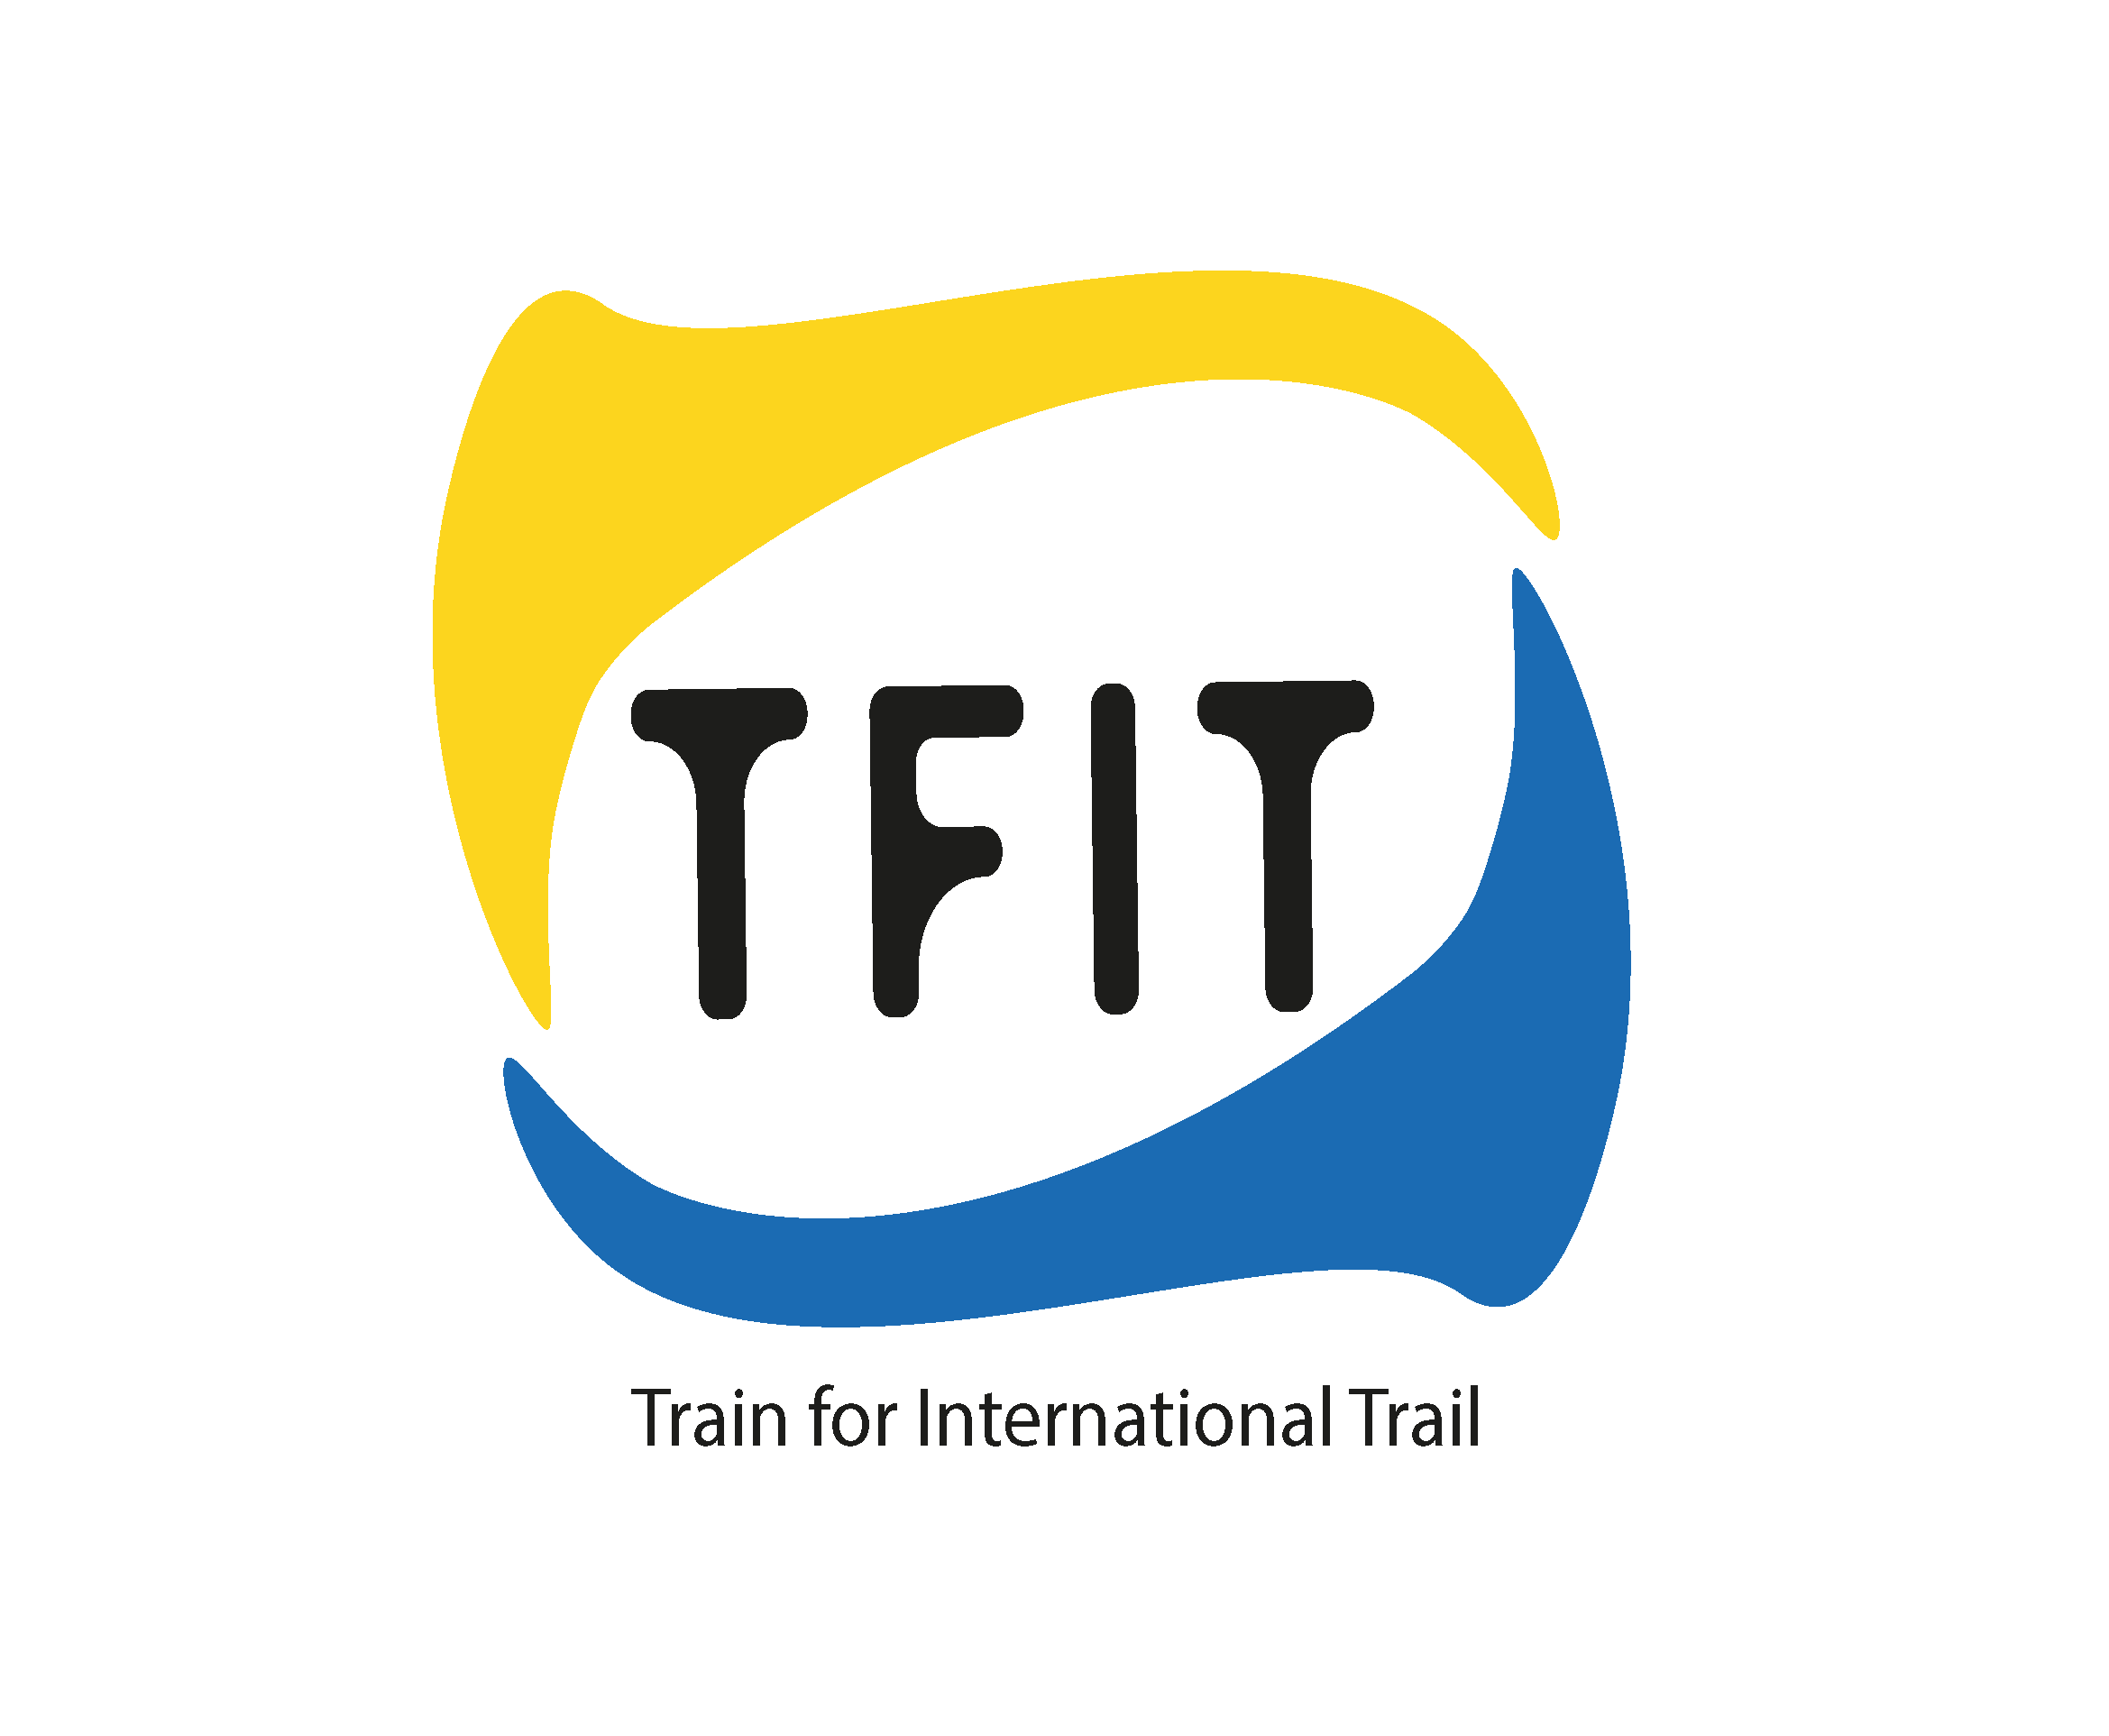 Train for international trail